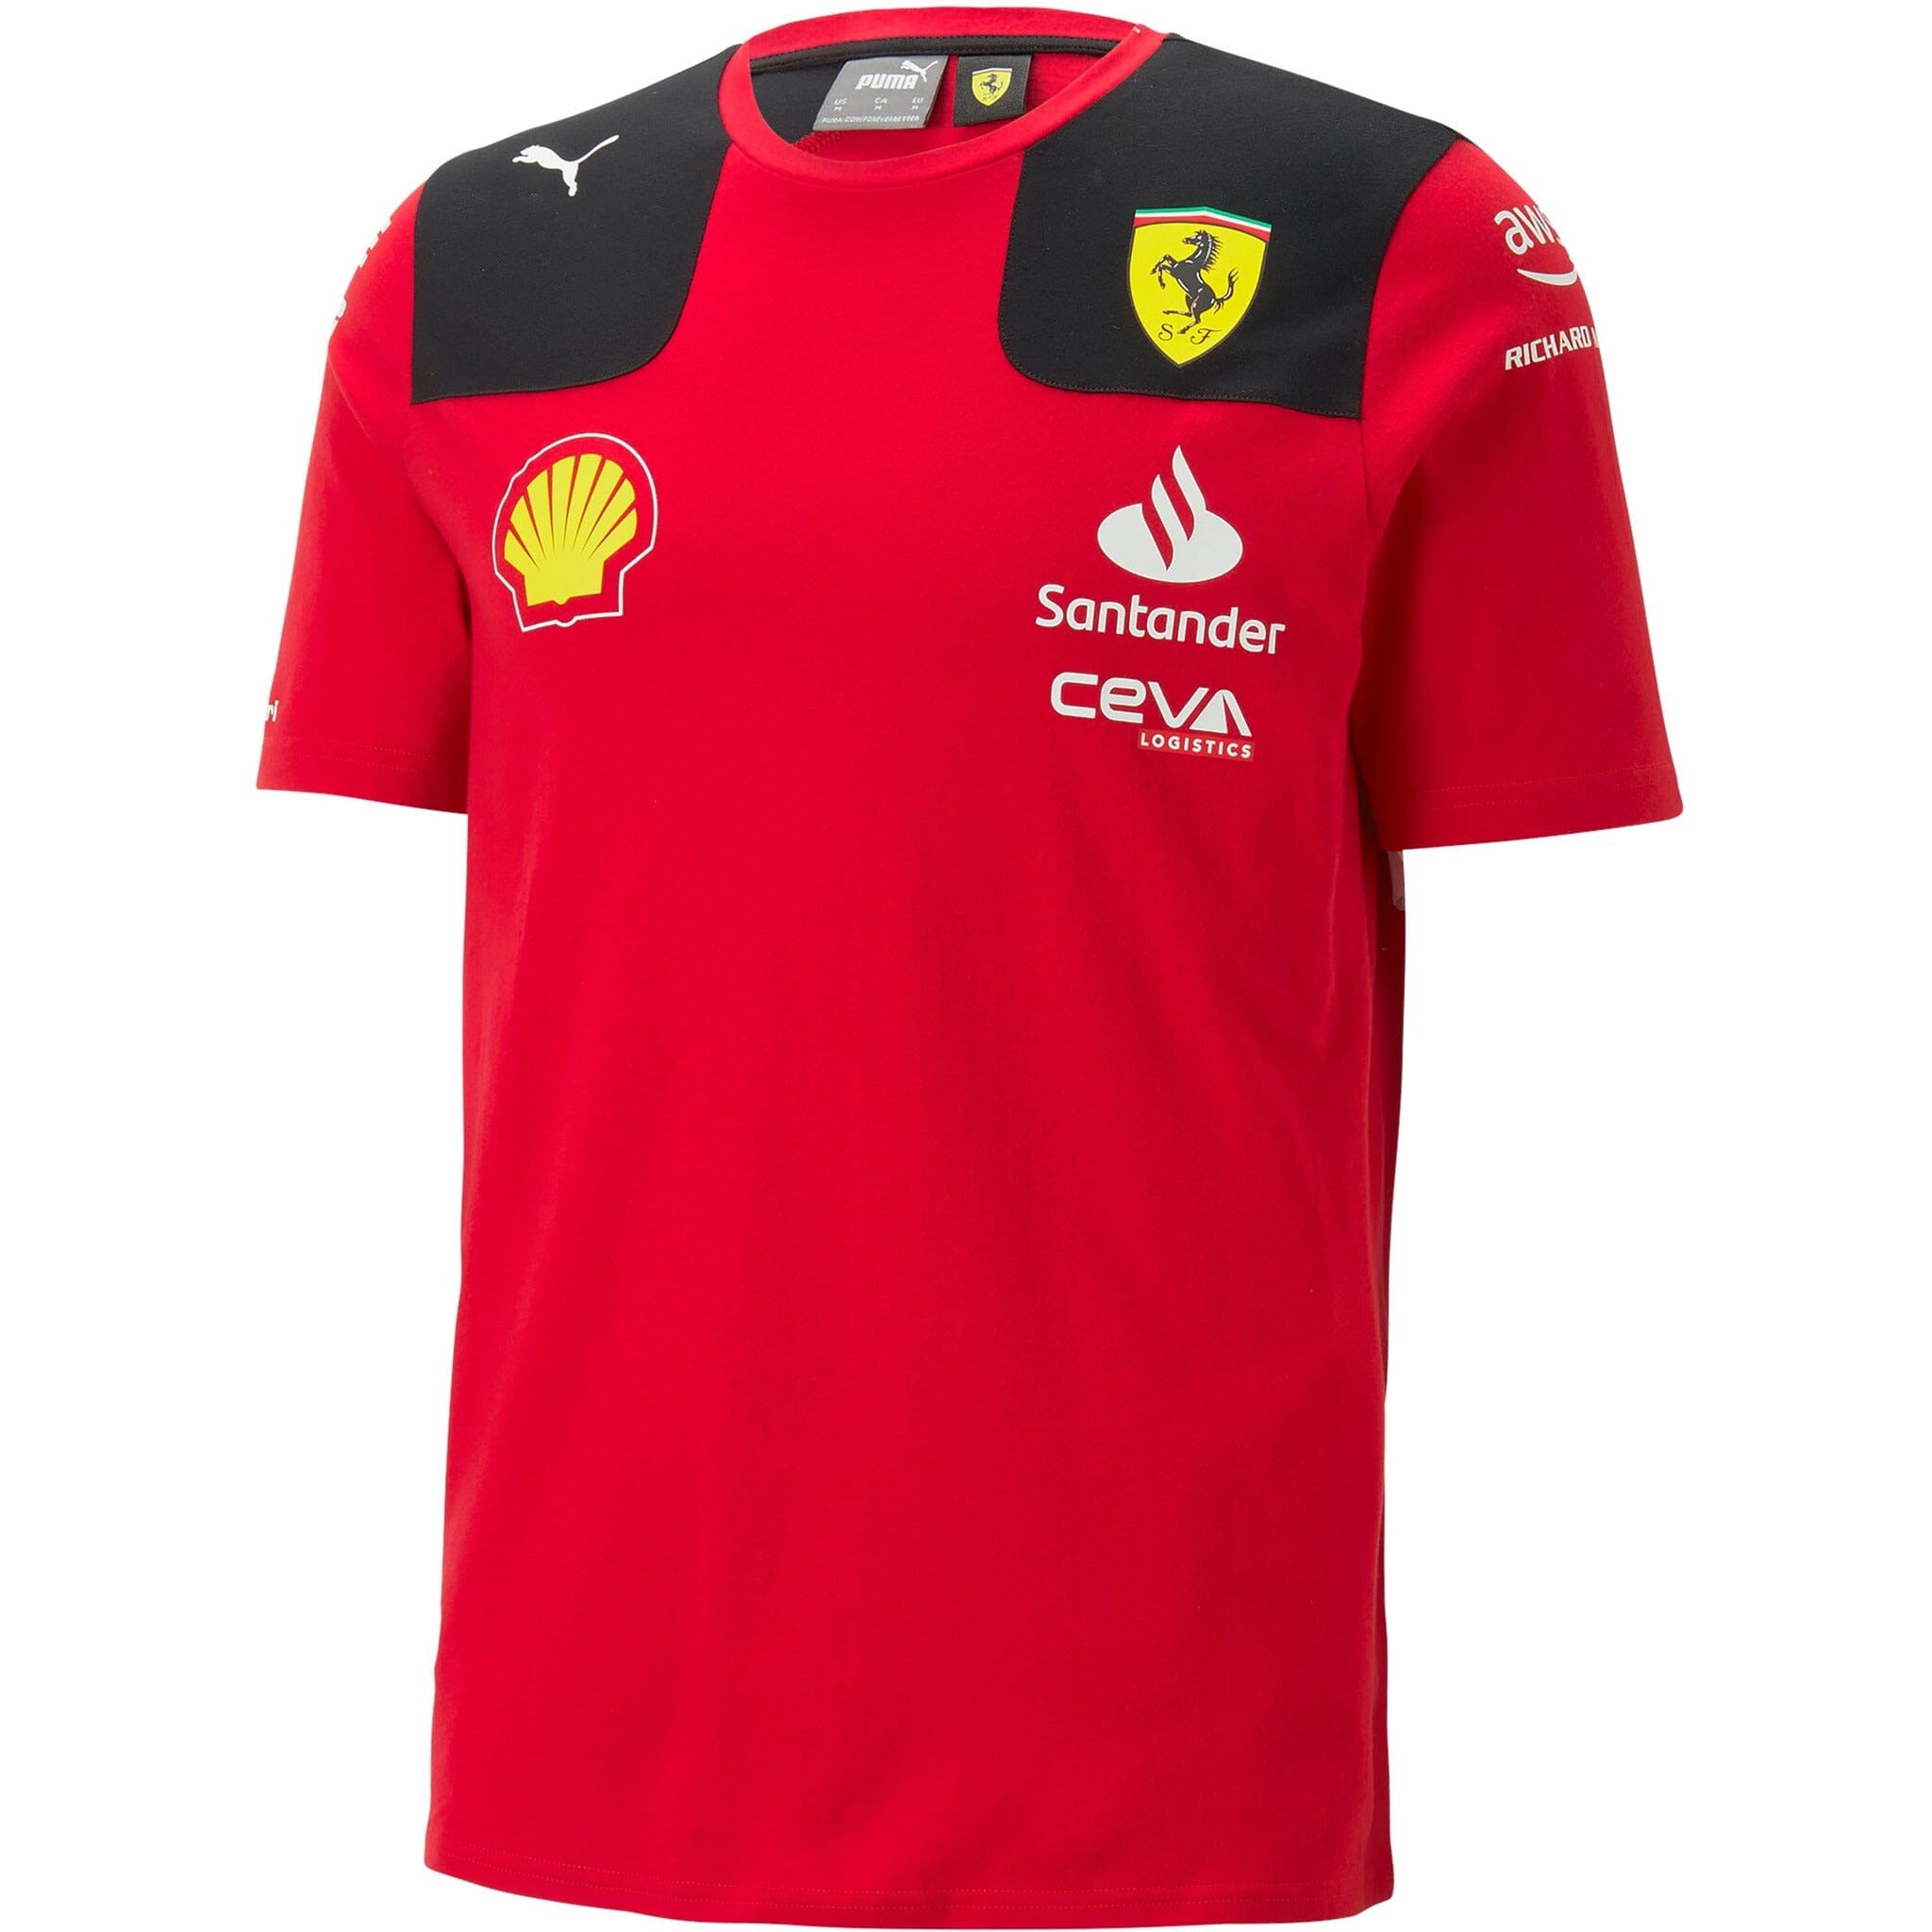 Formula F1 Racing Sports Team Merch T Shirt